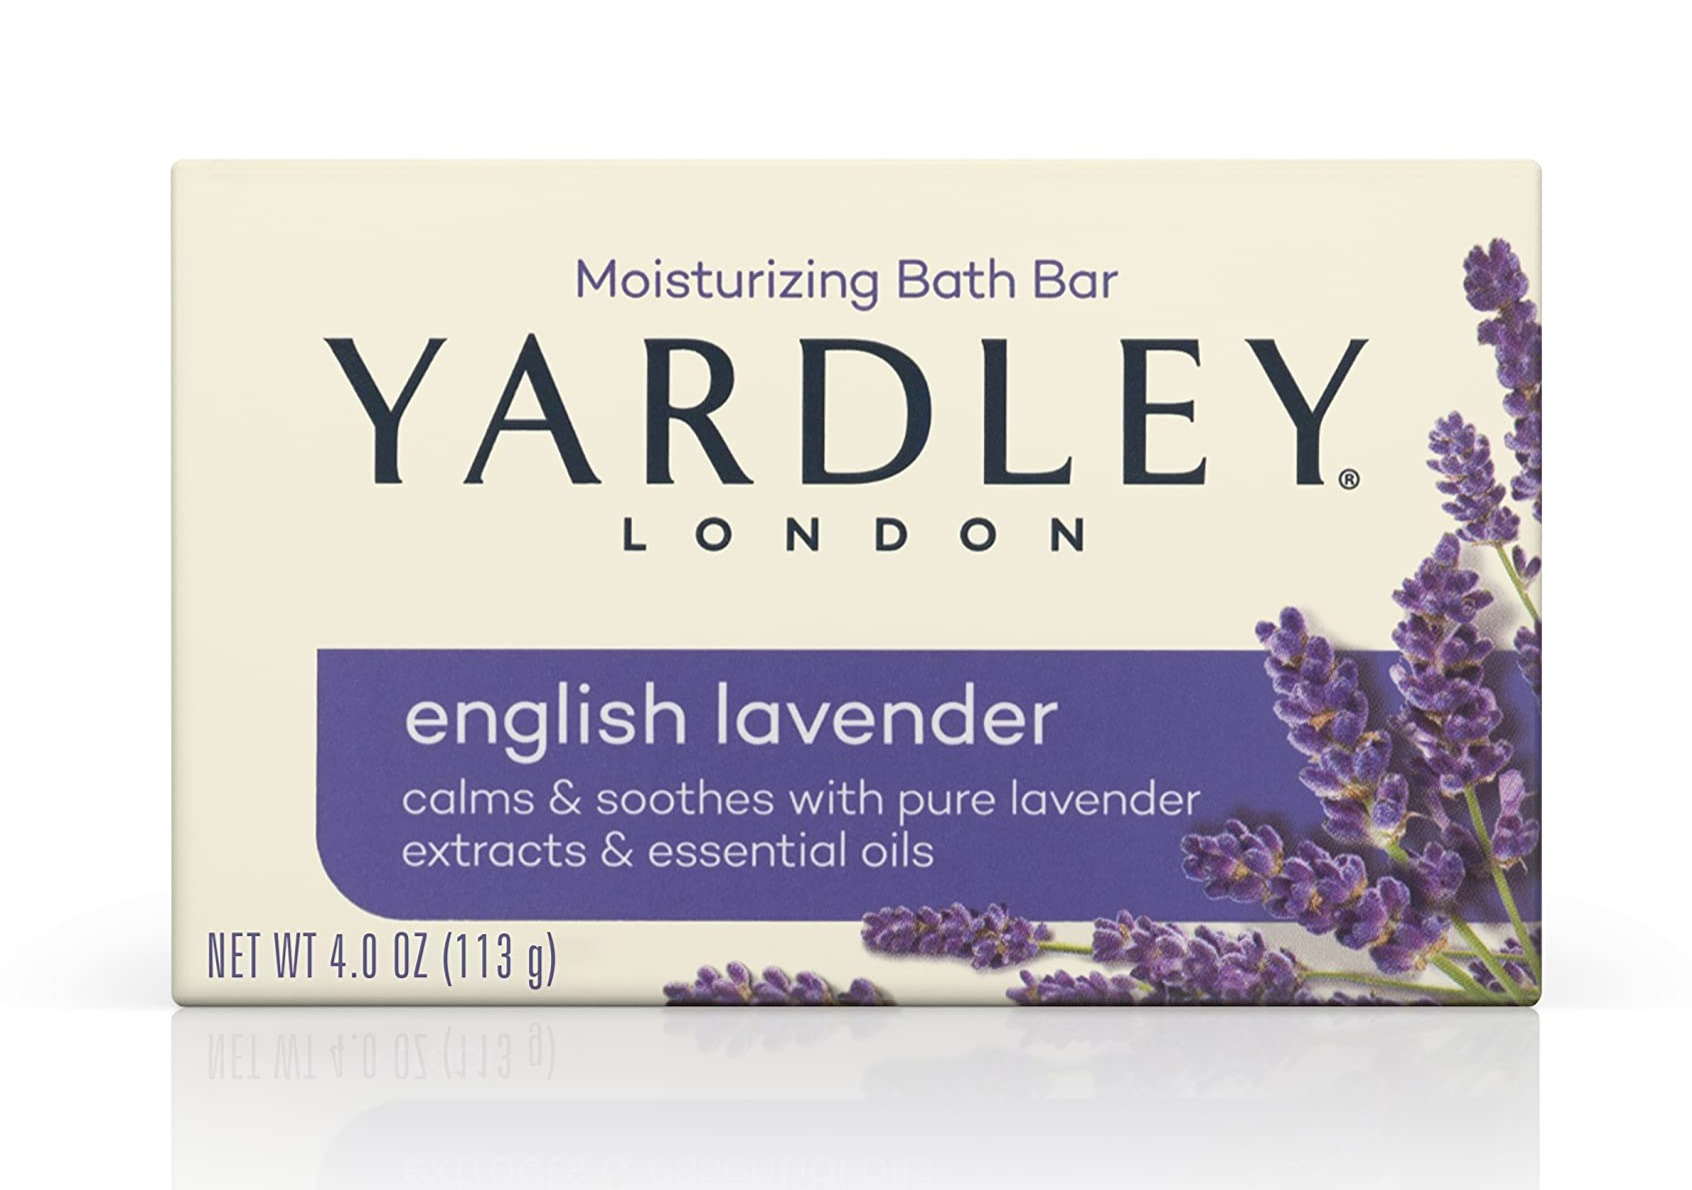 4.25-Oz Yardley London Moisturizing Bath Bar Soap (English Lavender) $1.05 + Free Shipping w/ Prime or on orders over $35